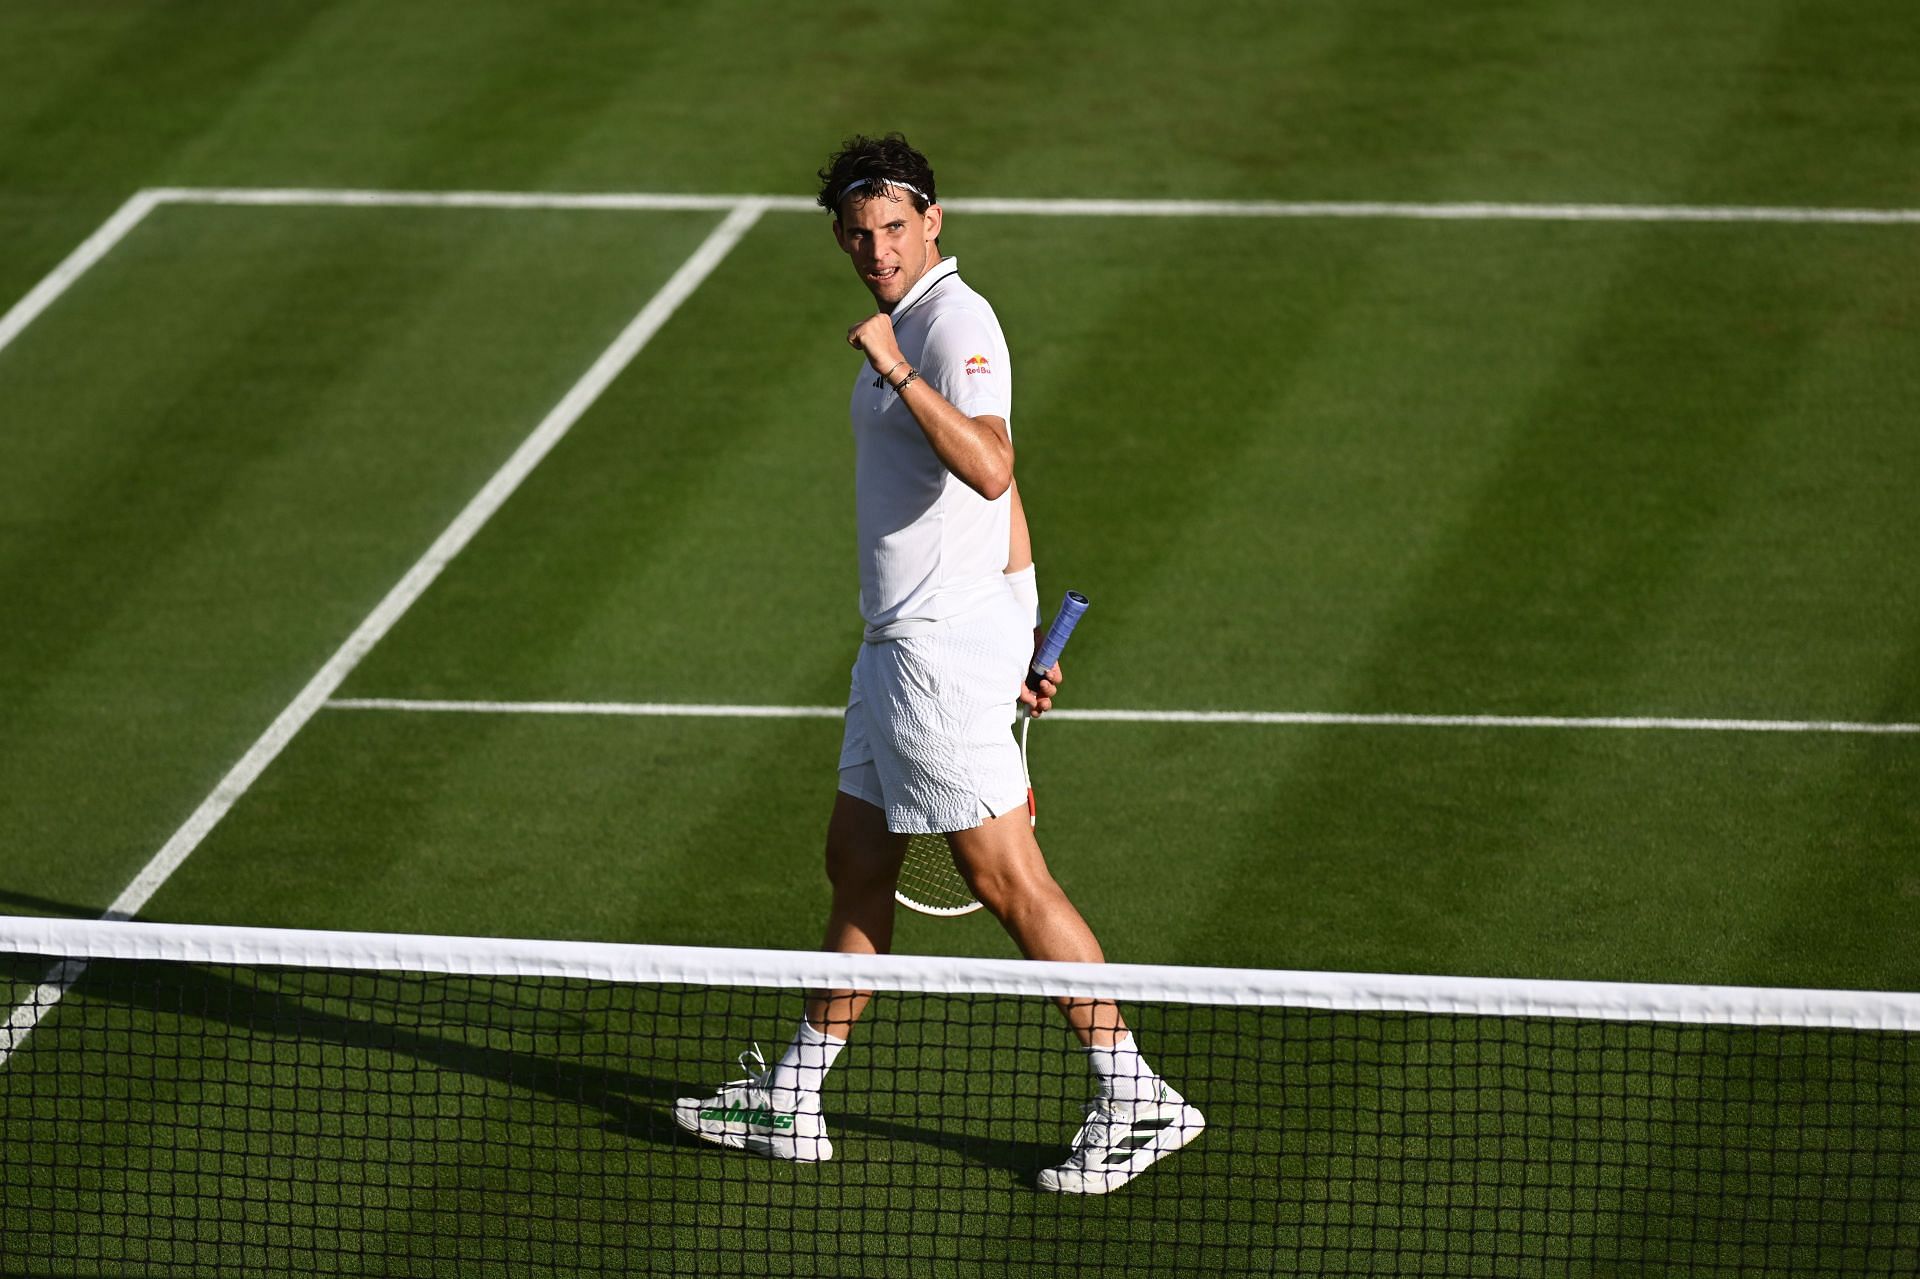 Dominic Thiem in action at Wimbledon